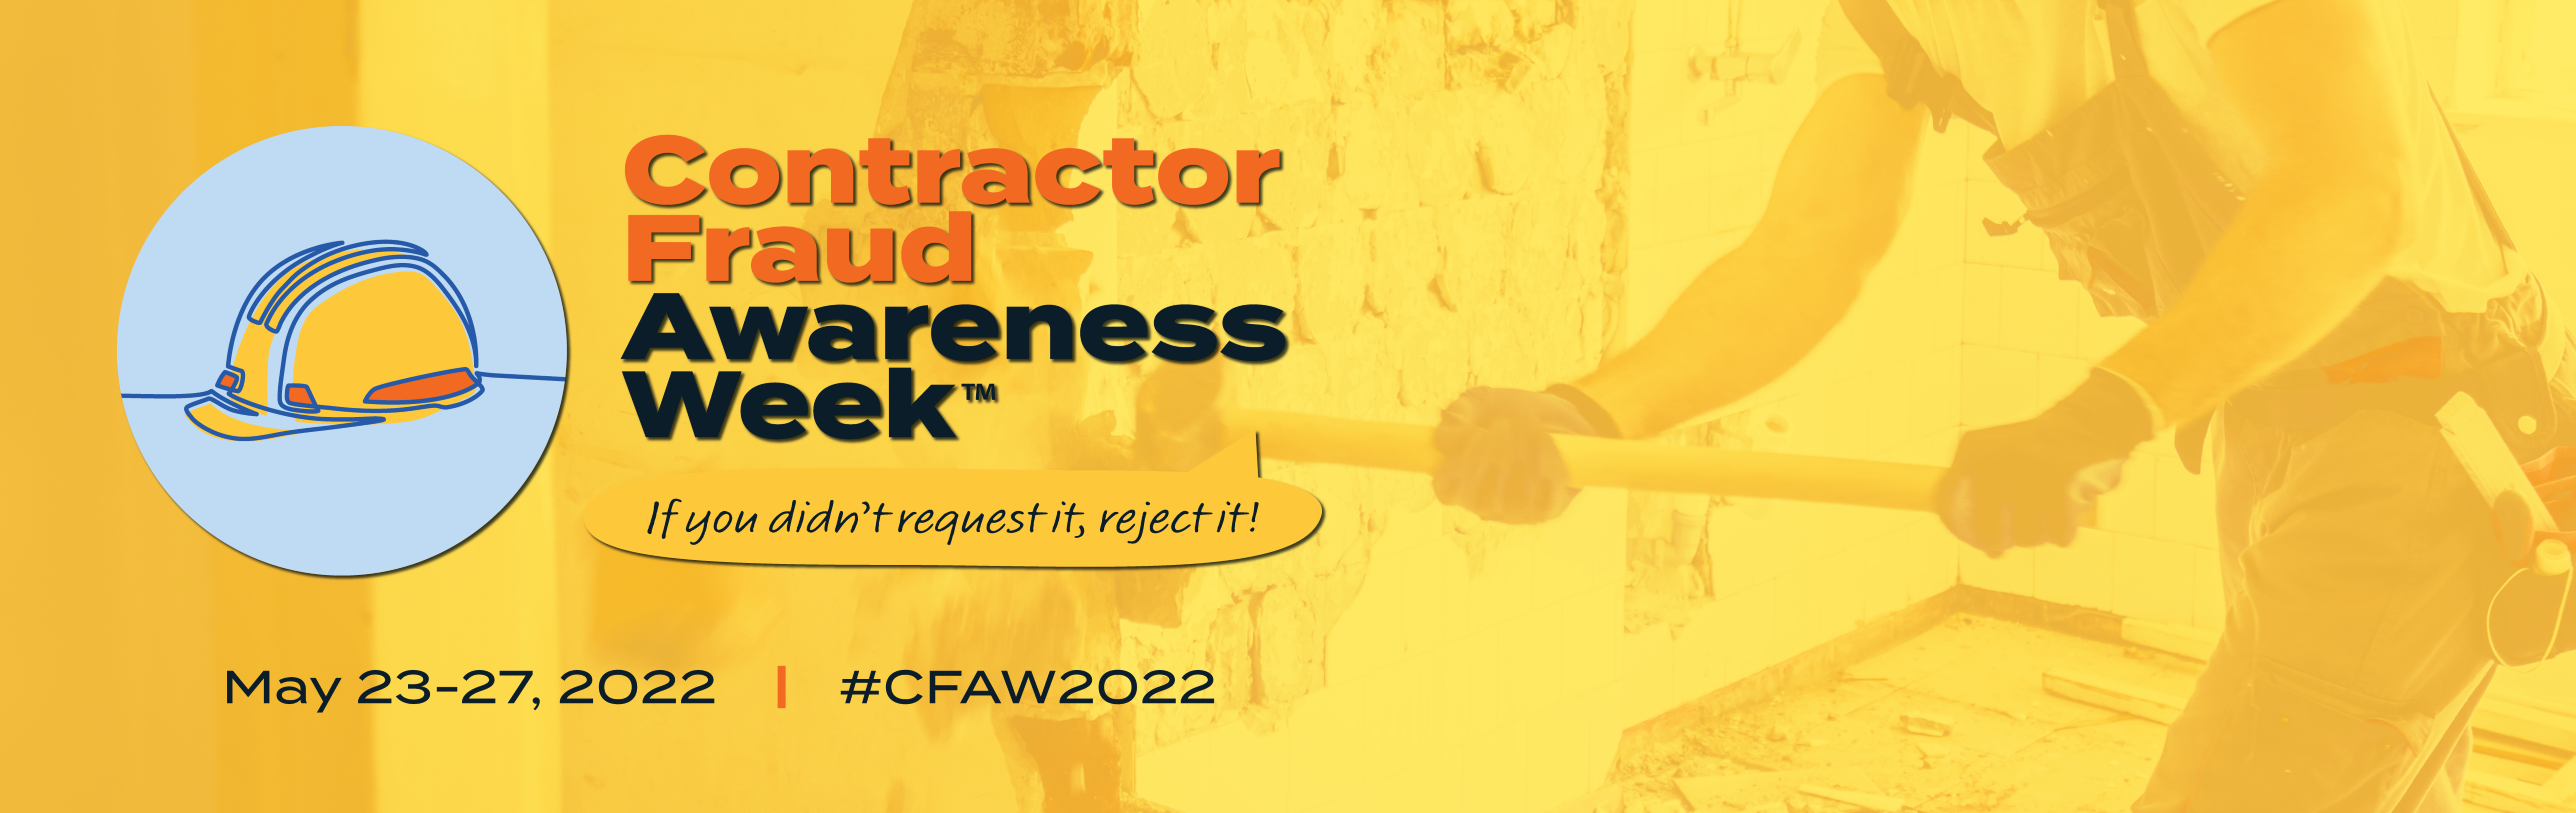 CFAW2022 web banner